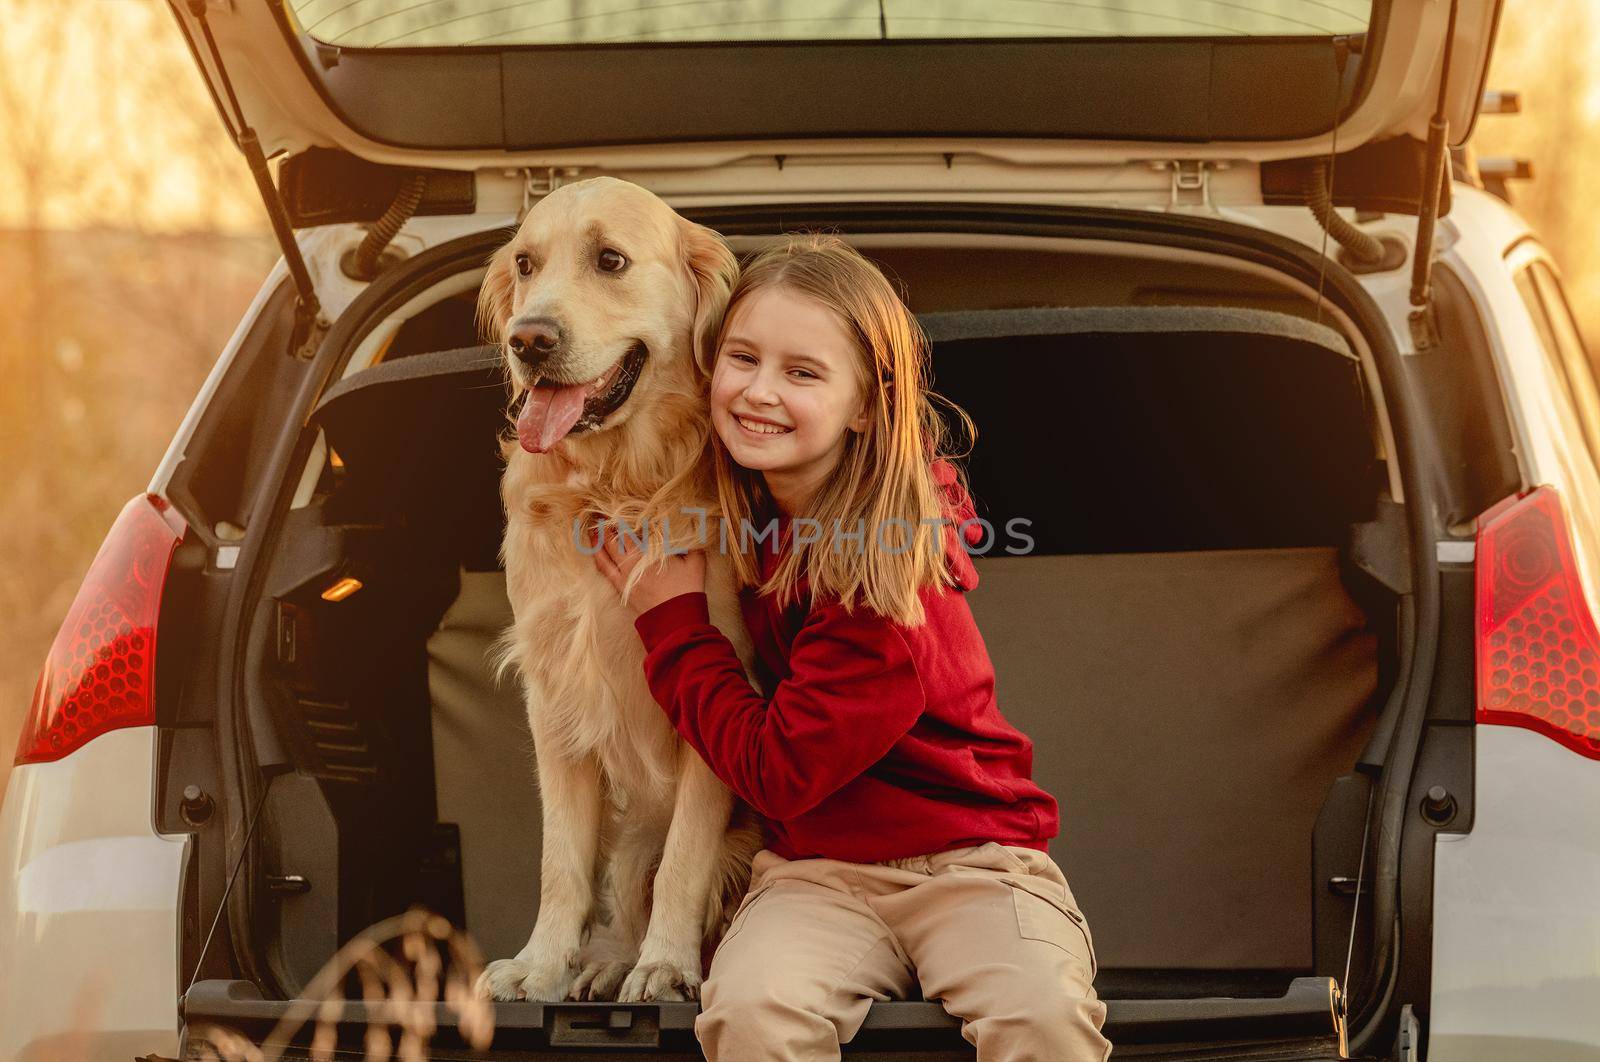 Girl with golden retriever dog in car by tan4ikk1